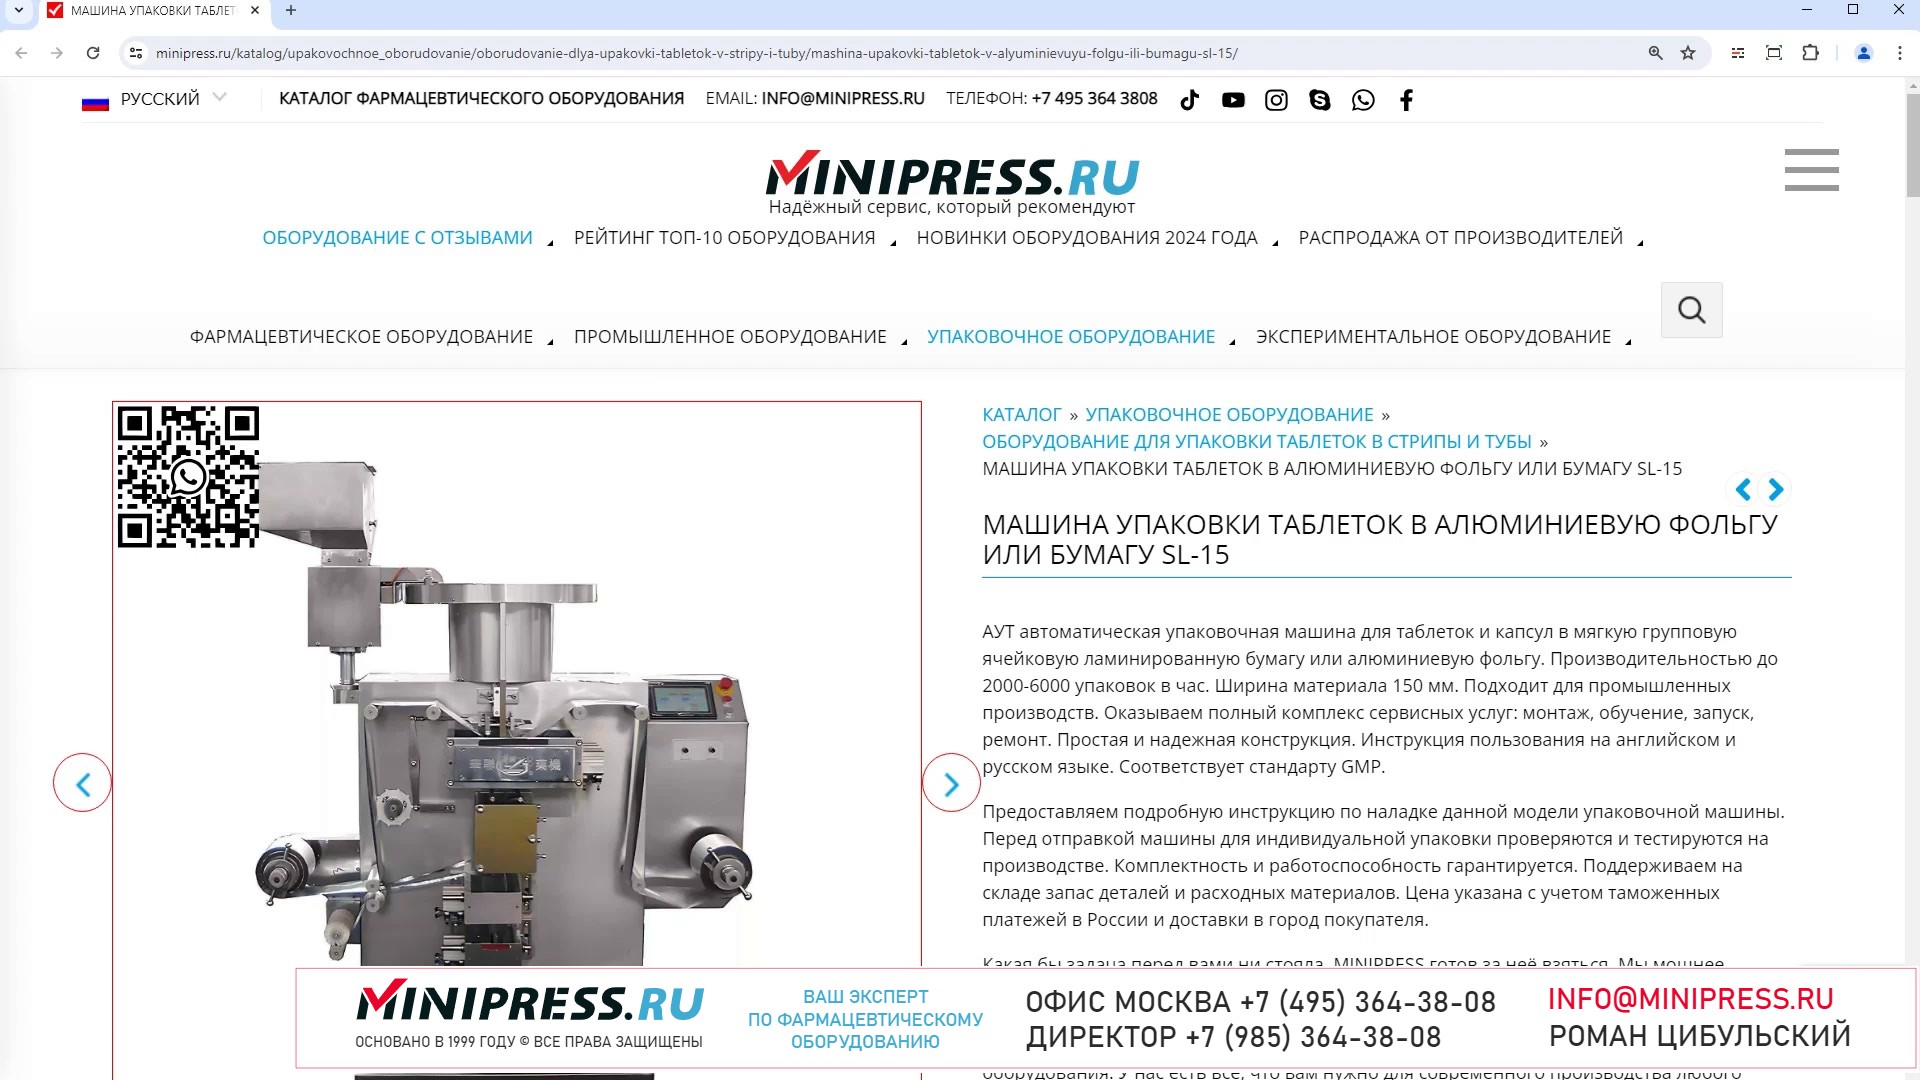 Minipress.ru Машина упаковки таблеток в алюминиевую фольгу или бумагу SL-15